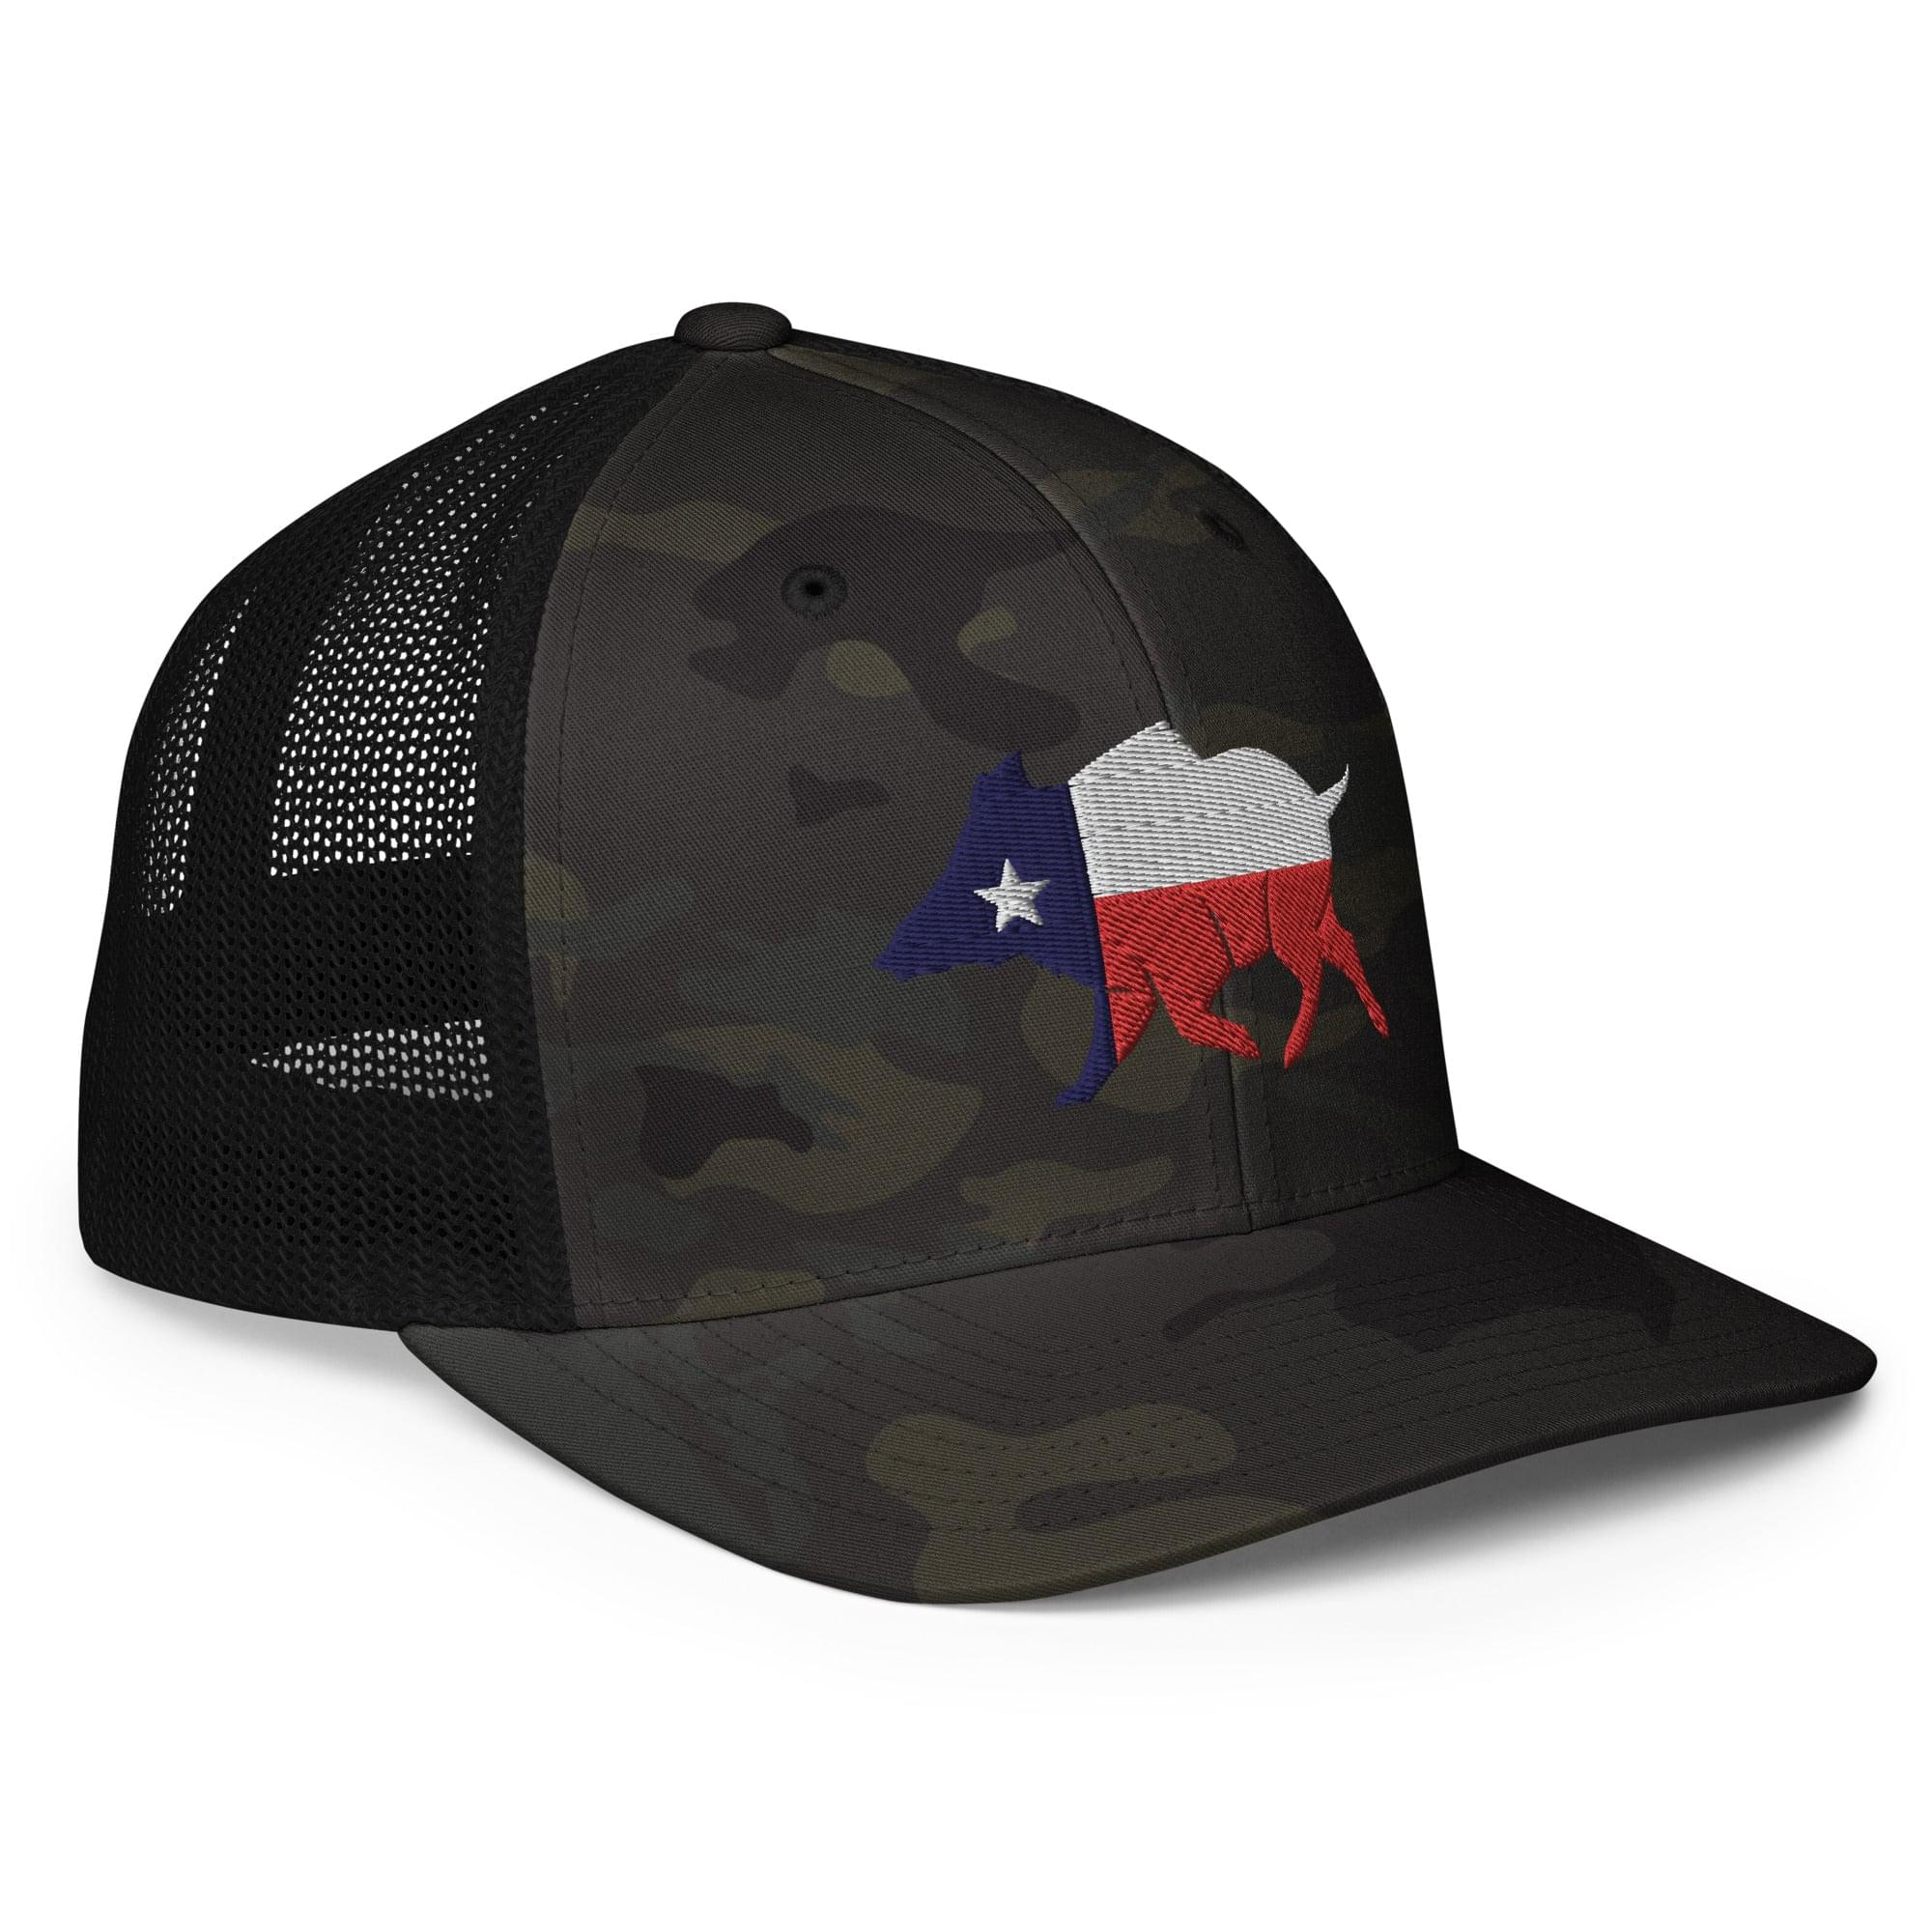 Wilding Boar Texas Trucker Hat - Wilding Life